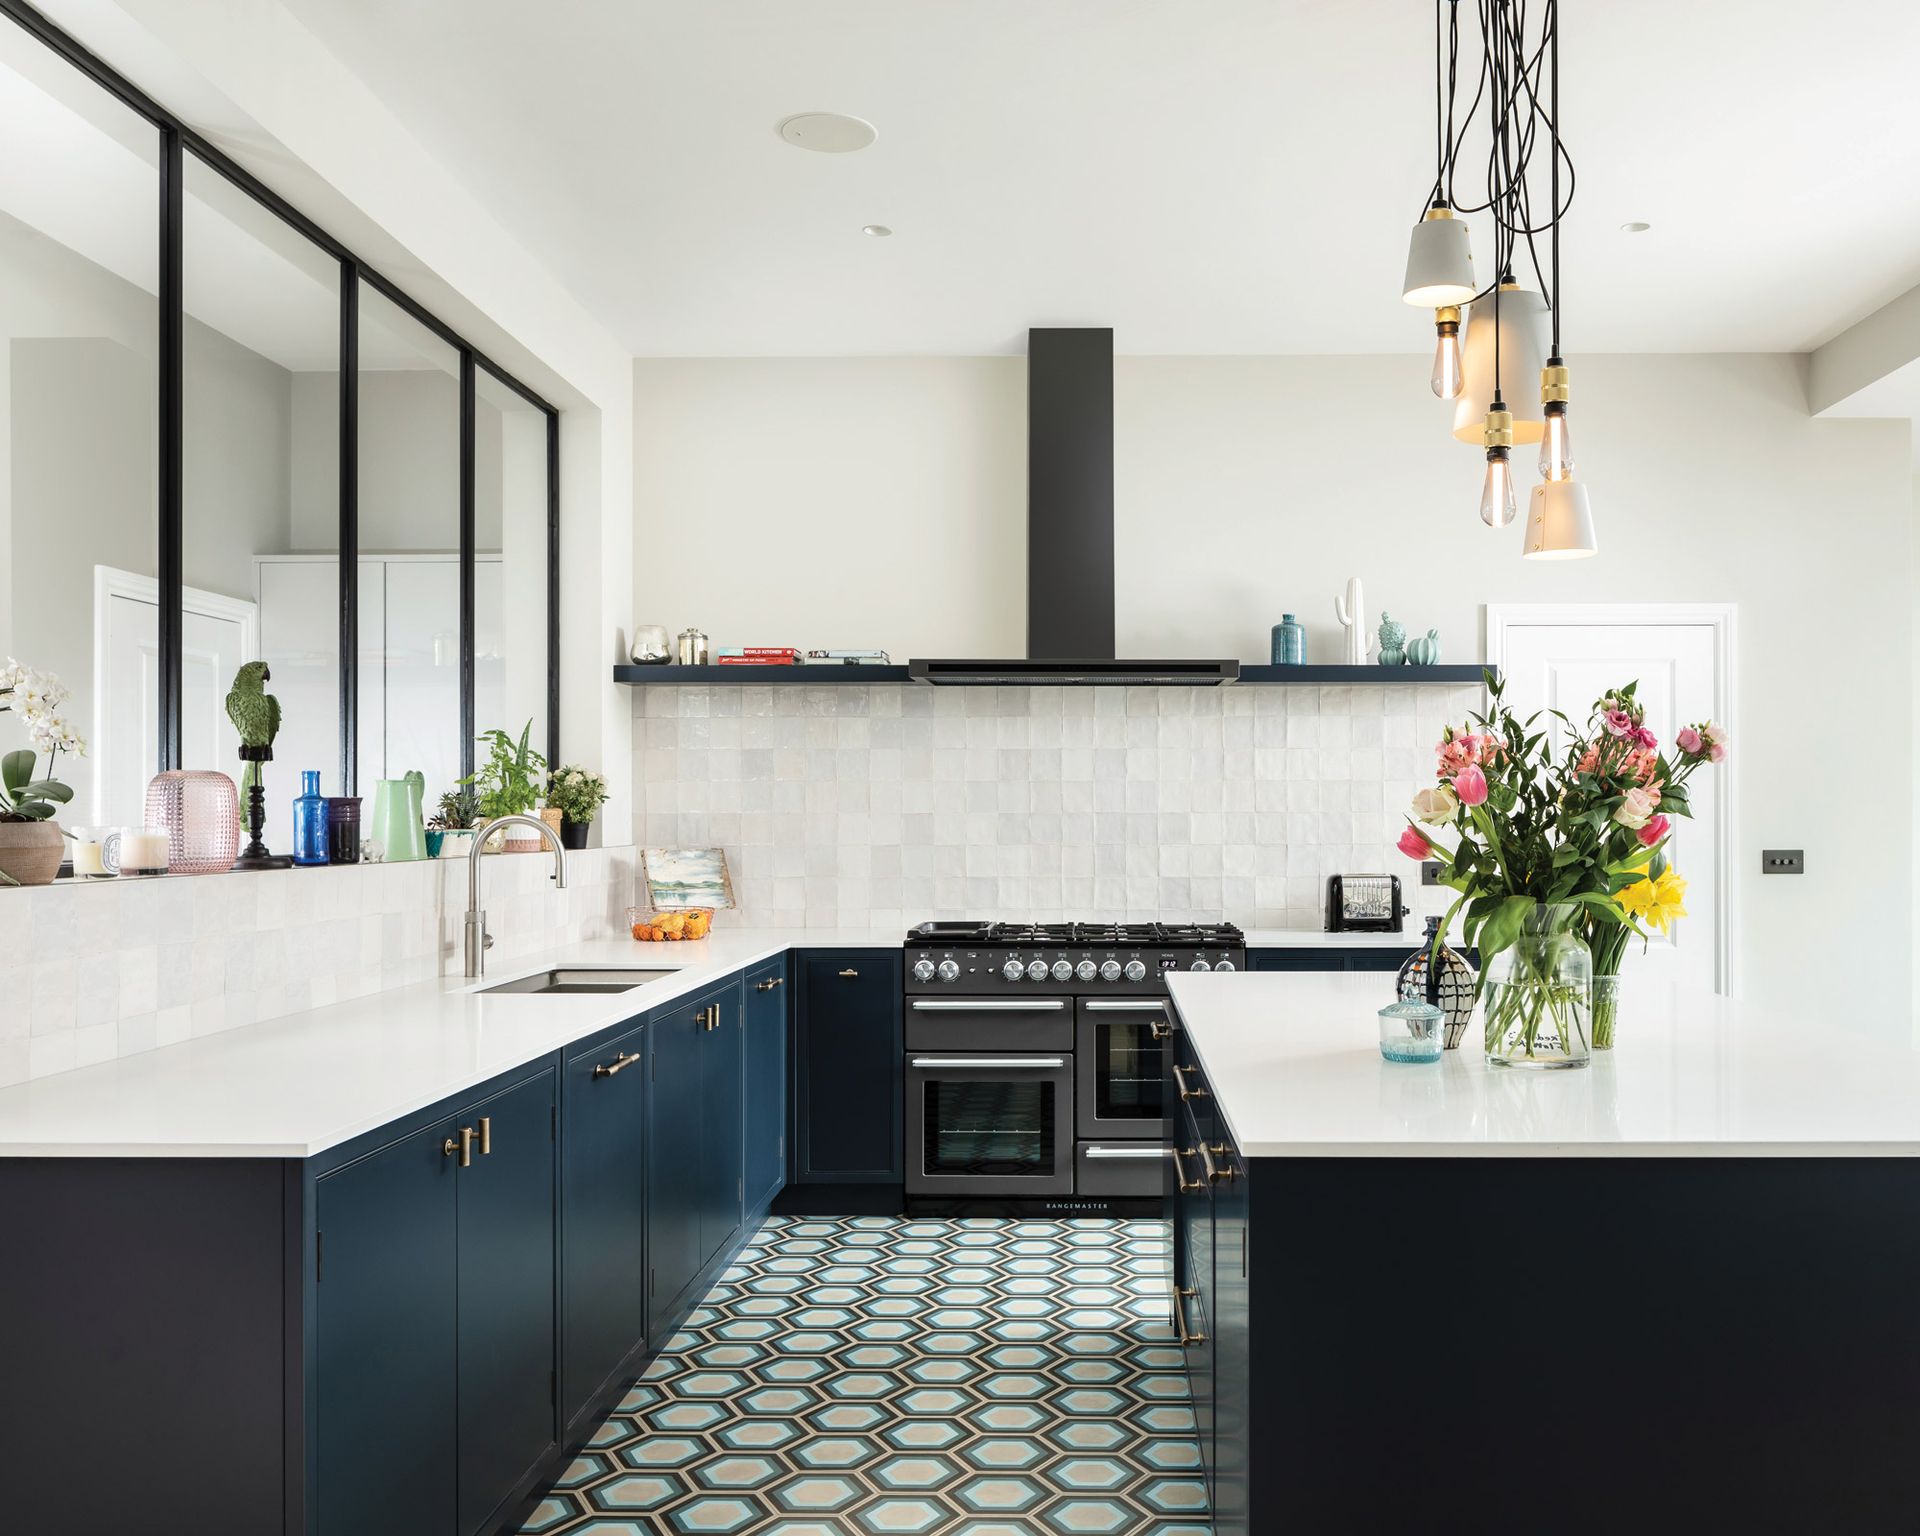 Basement kitchen ideas – ways to make it elegant and practical